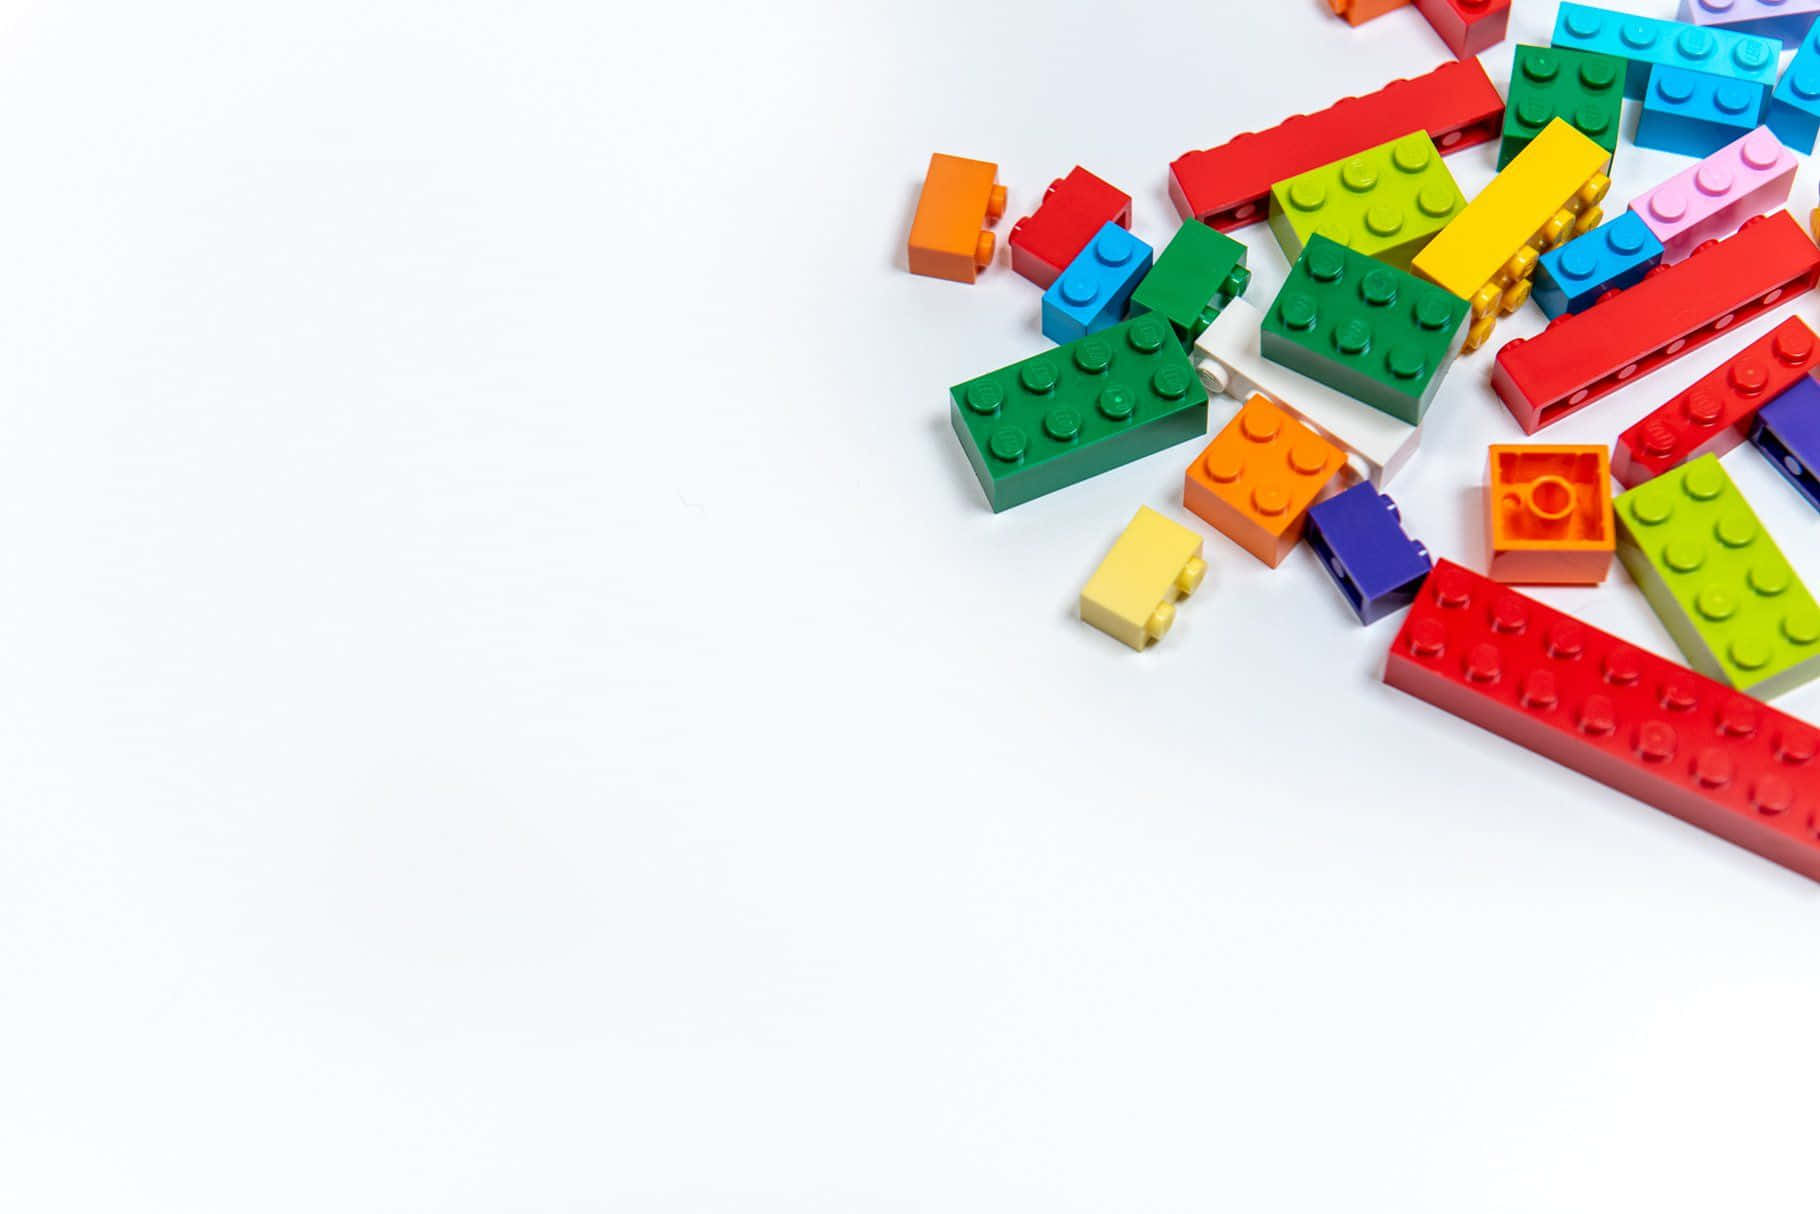 Lego bricks create endless possibilities